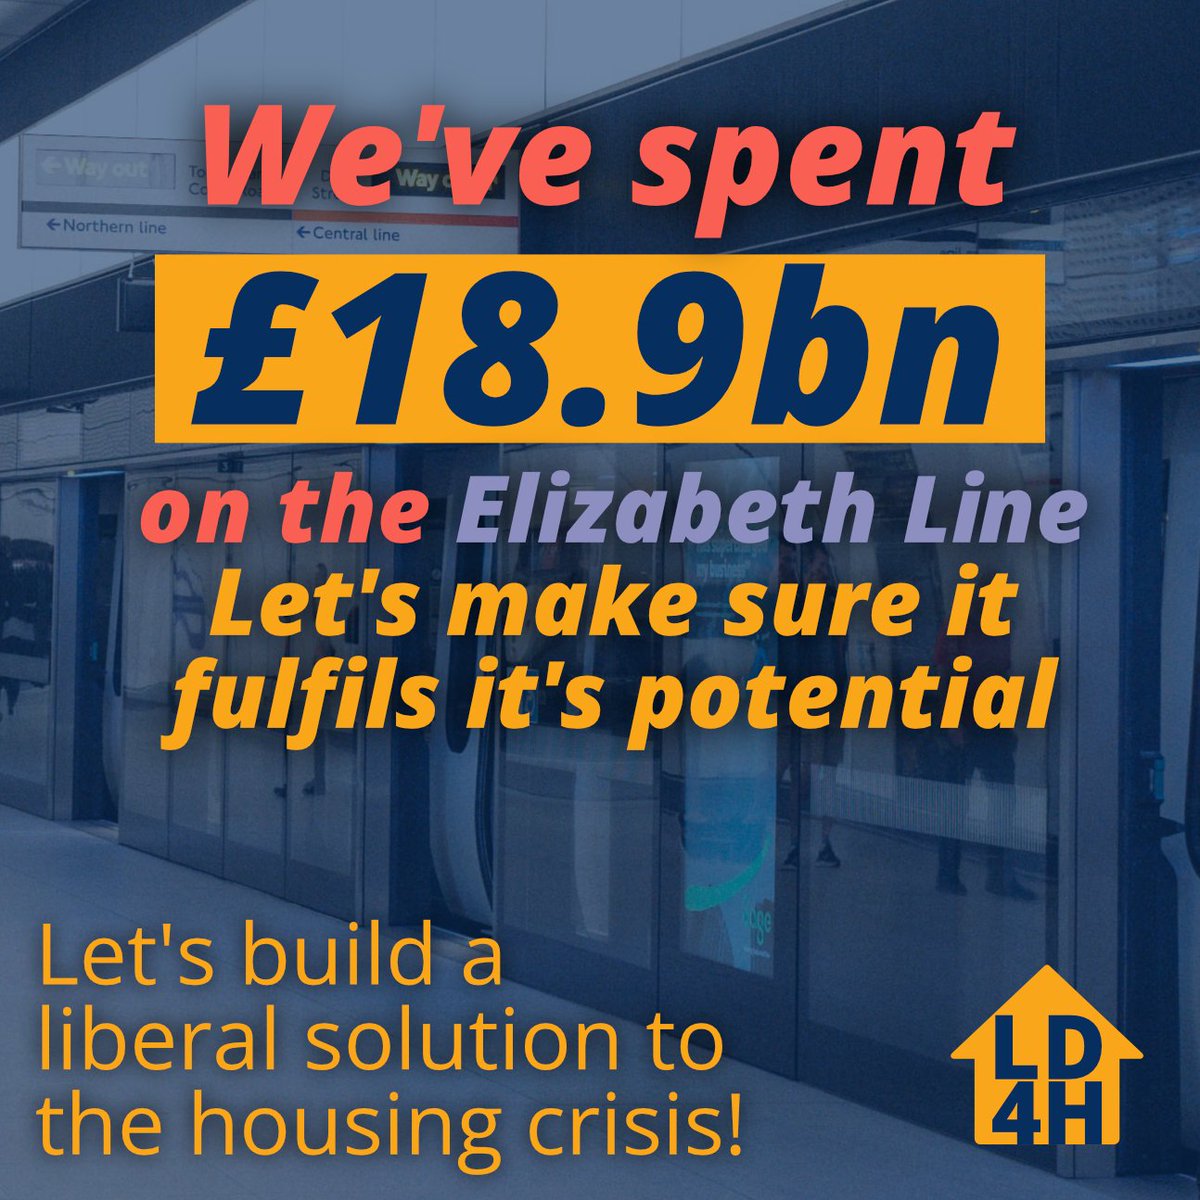 🚄 🚄 We've spent £18.9bn on the Elizabeth Line Let's make sure it fulfills its potential! Find out more 👉 libhousing.com/public-transpo…